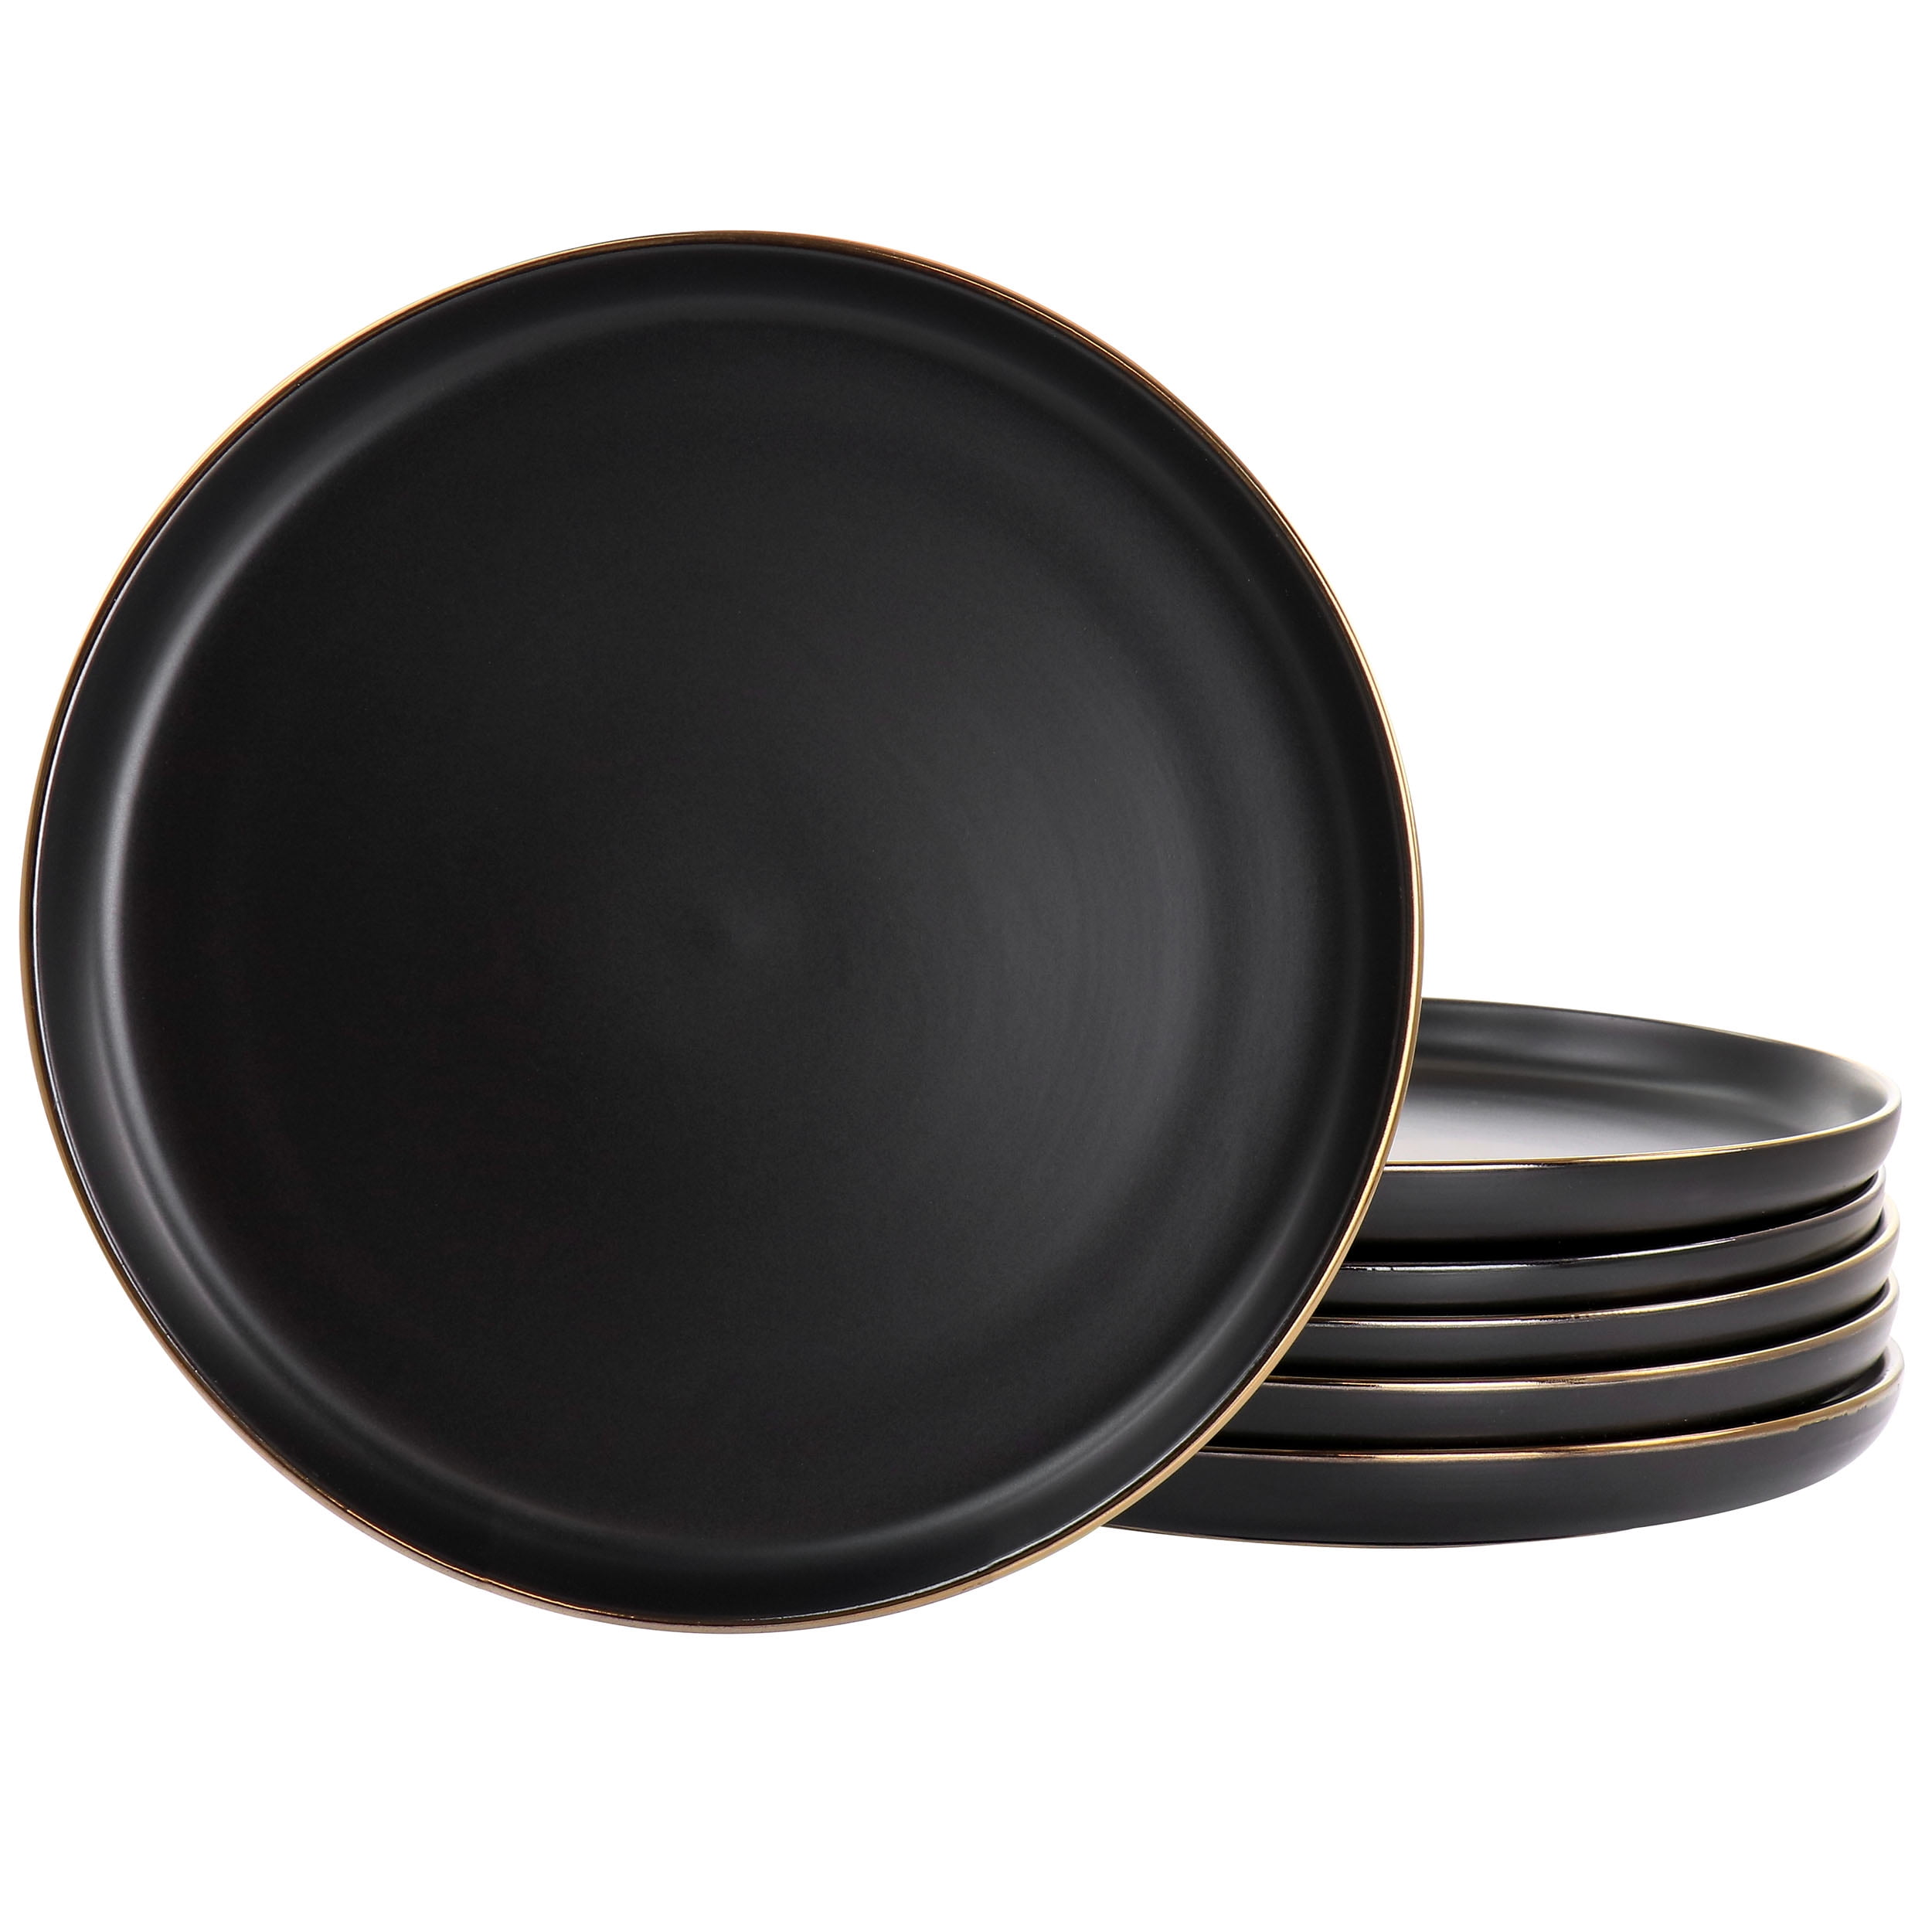 Elama Paul 6 Piece Stoneware Dinner Plate Set in Matt Black with Gold Rim